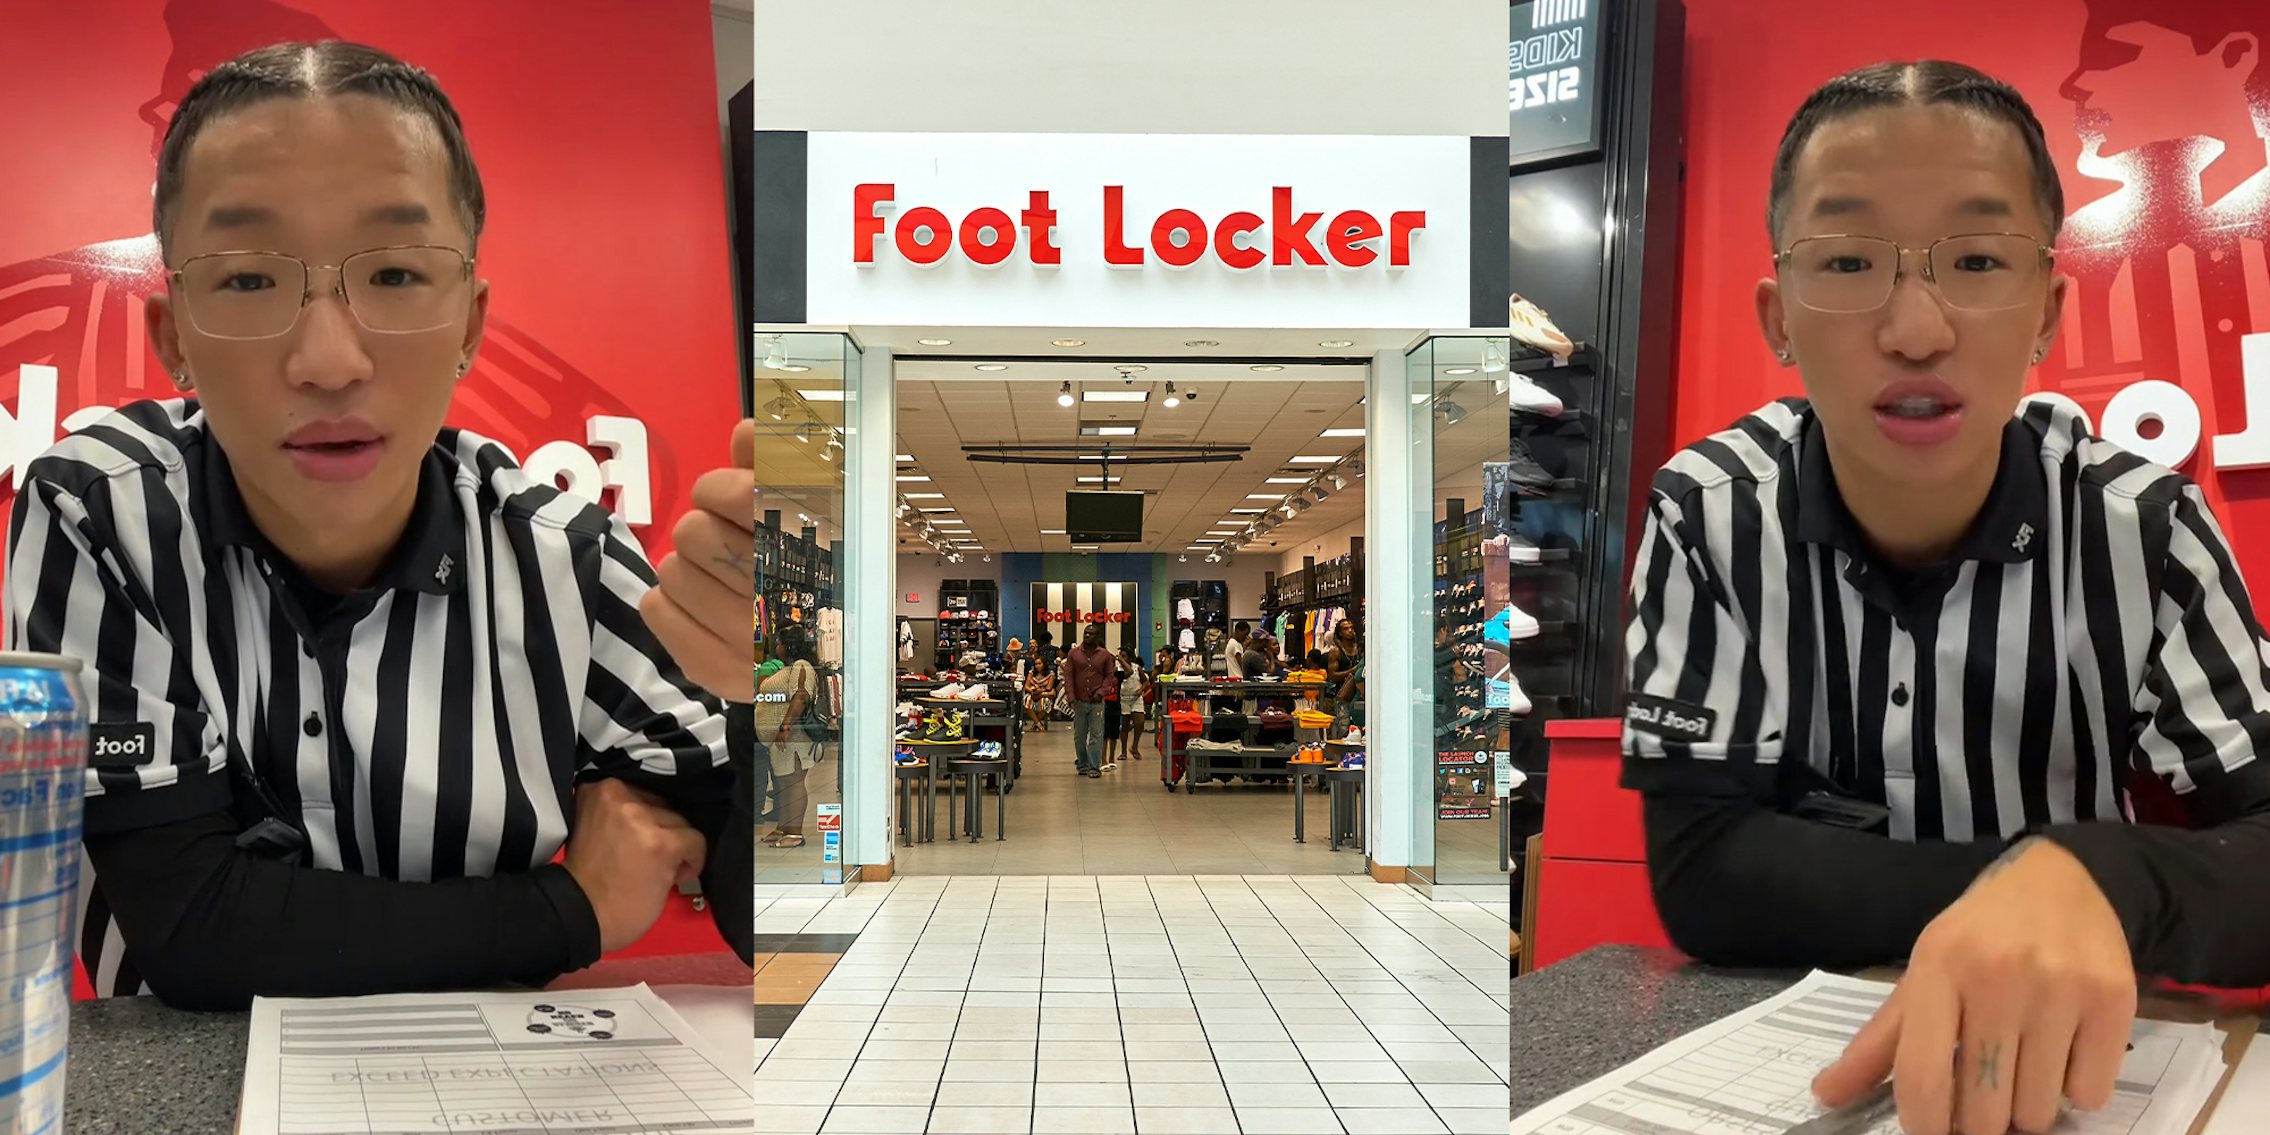 Foot Locker Greeter Shares PSA To Customers